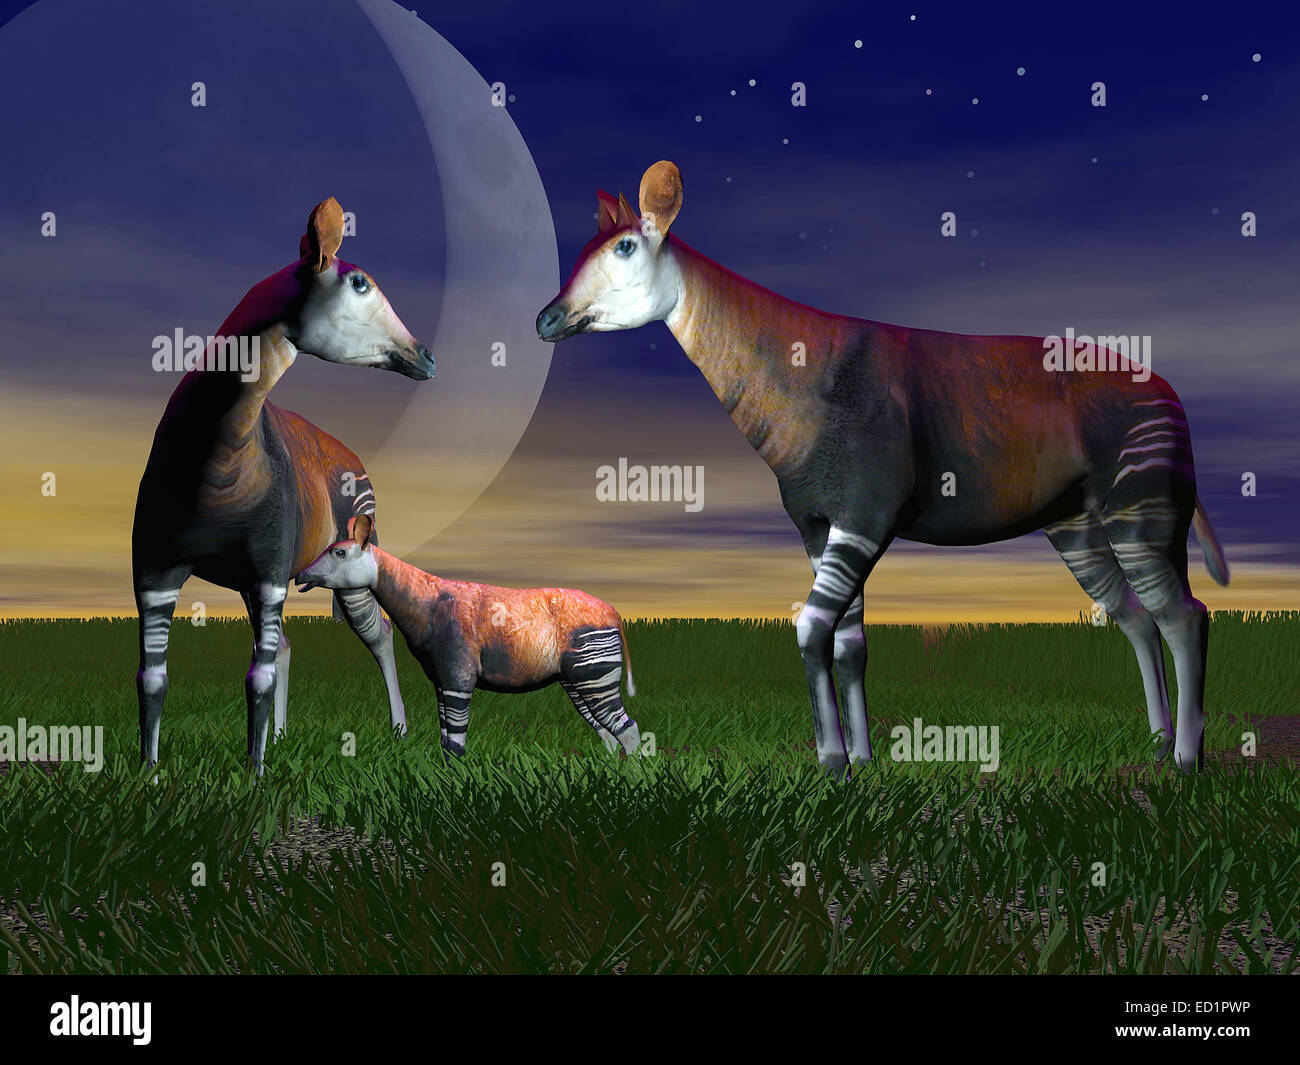 Okapi (okapia johnstoni) family standing on the grass by night Stock Photo